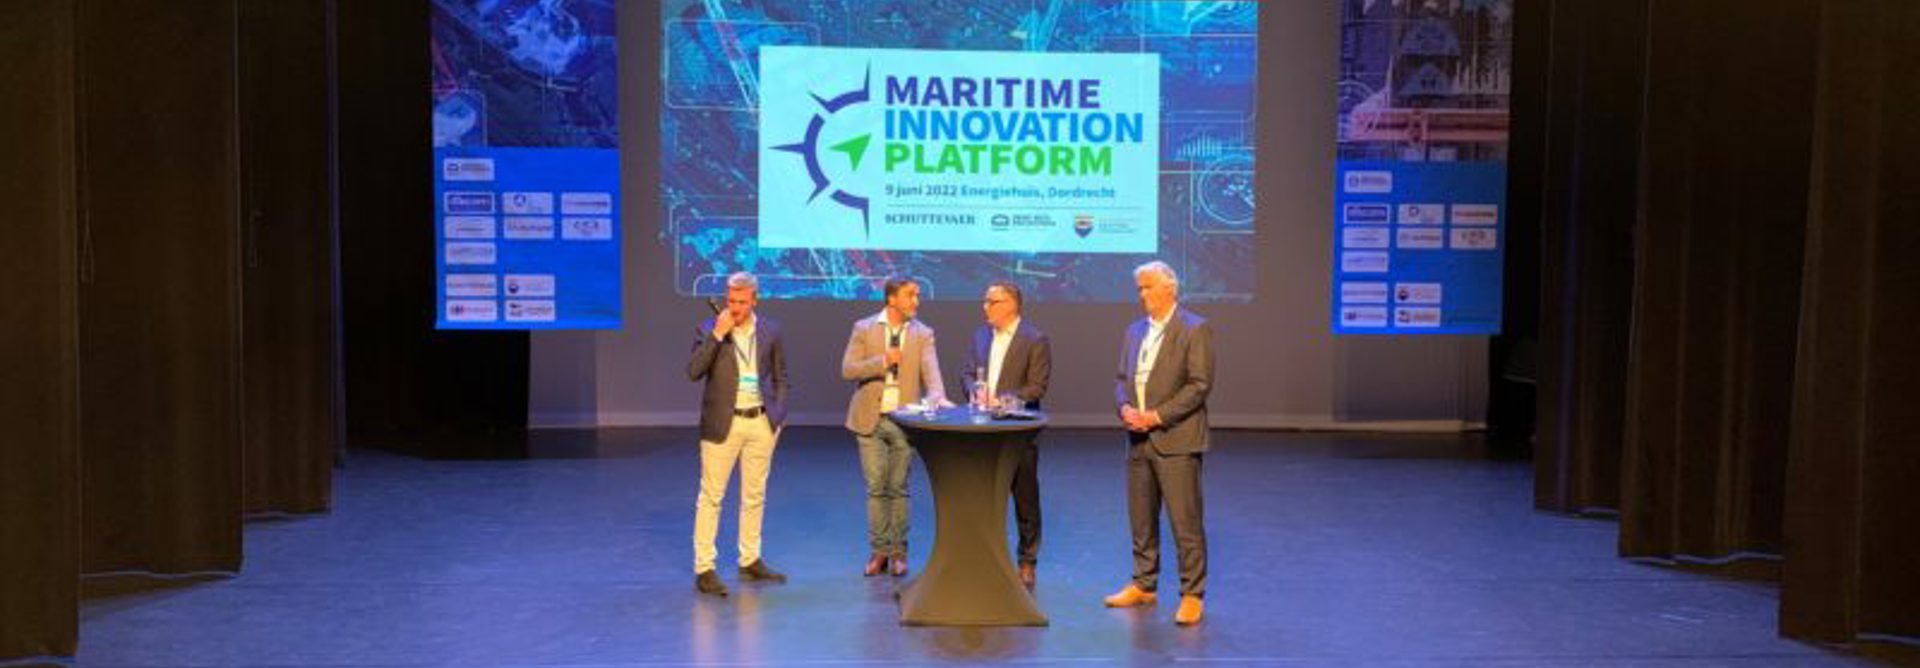 Maritime Innovation Platform 1 800X280 (1)